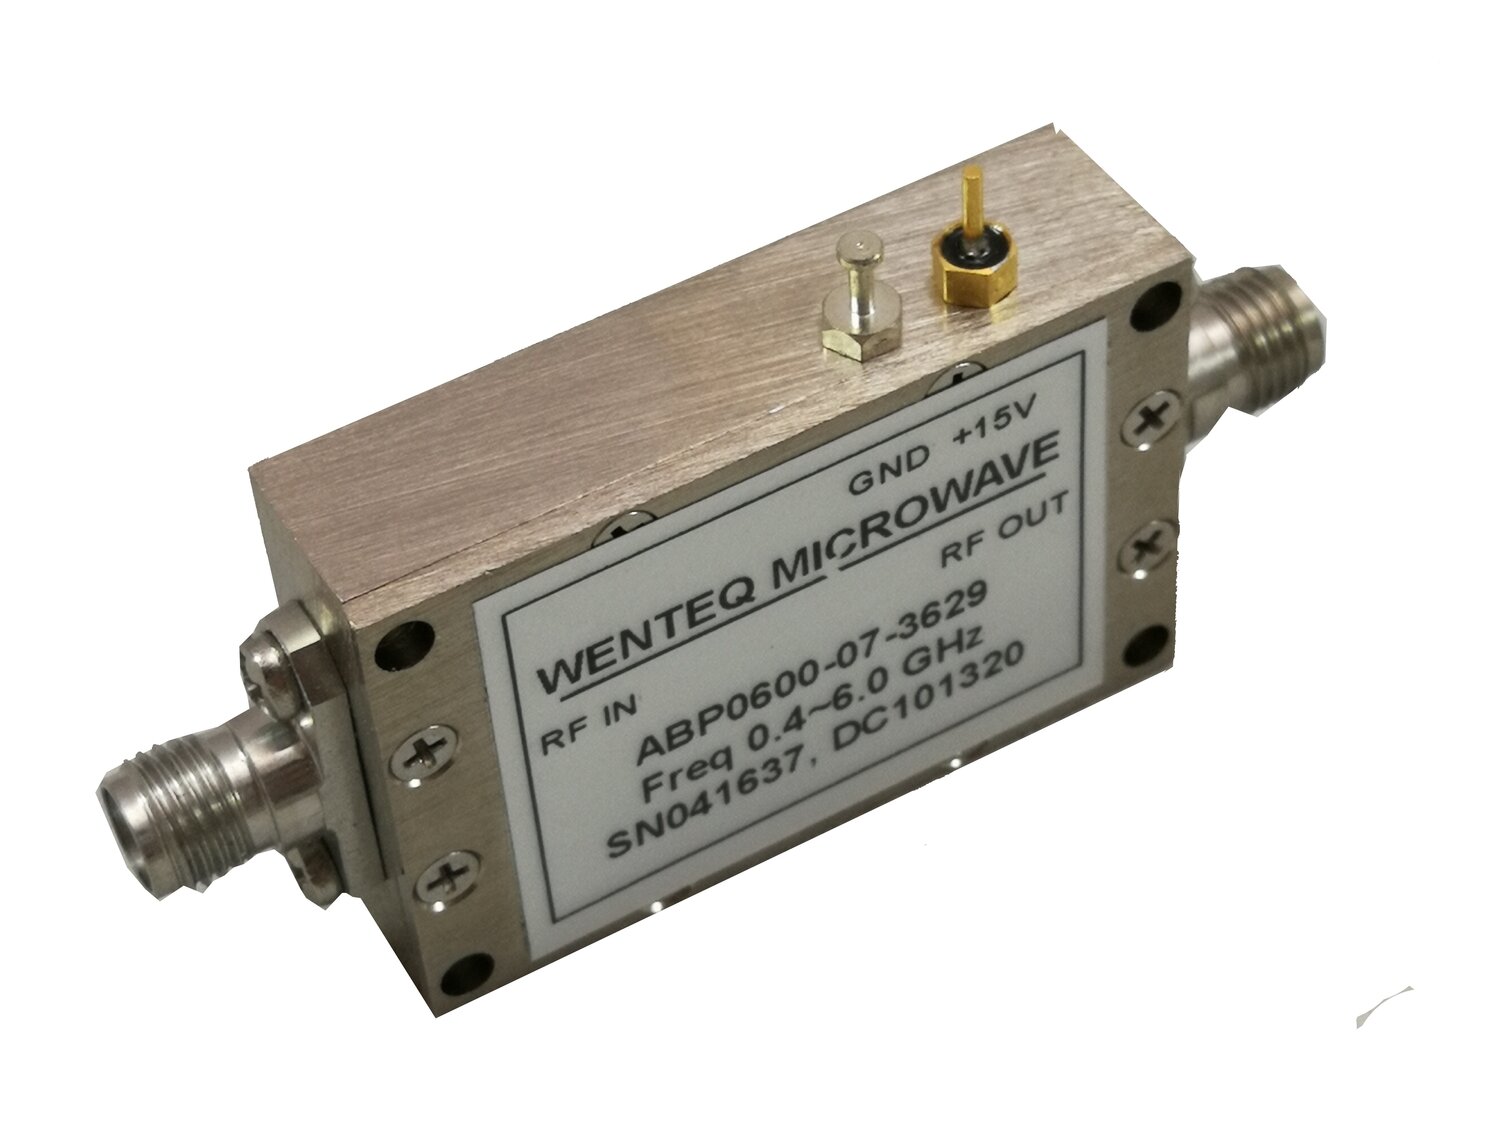 Broadband Power Amplifier
Abp0600-07-3629